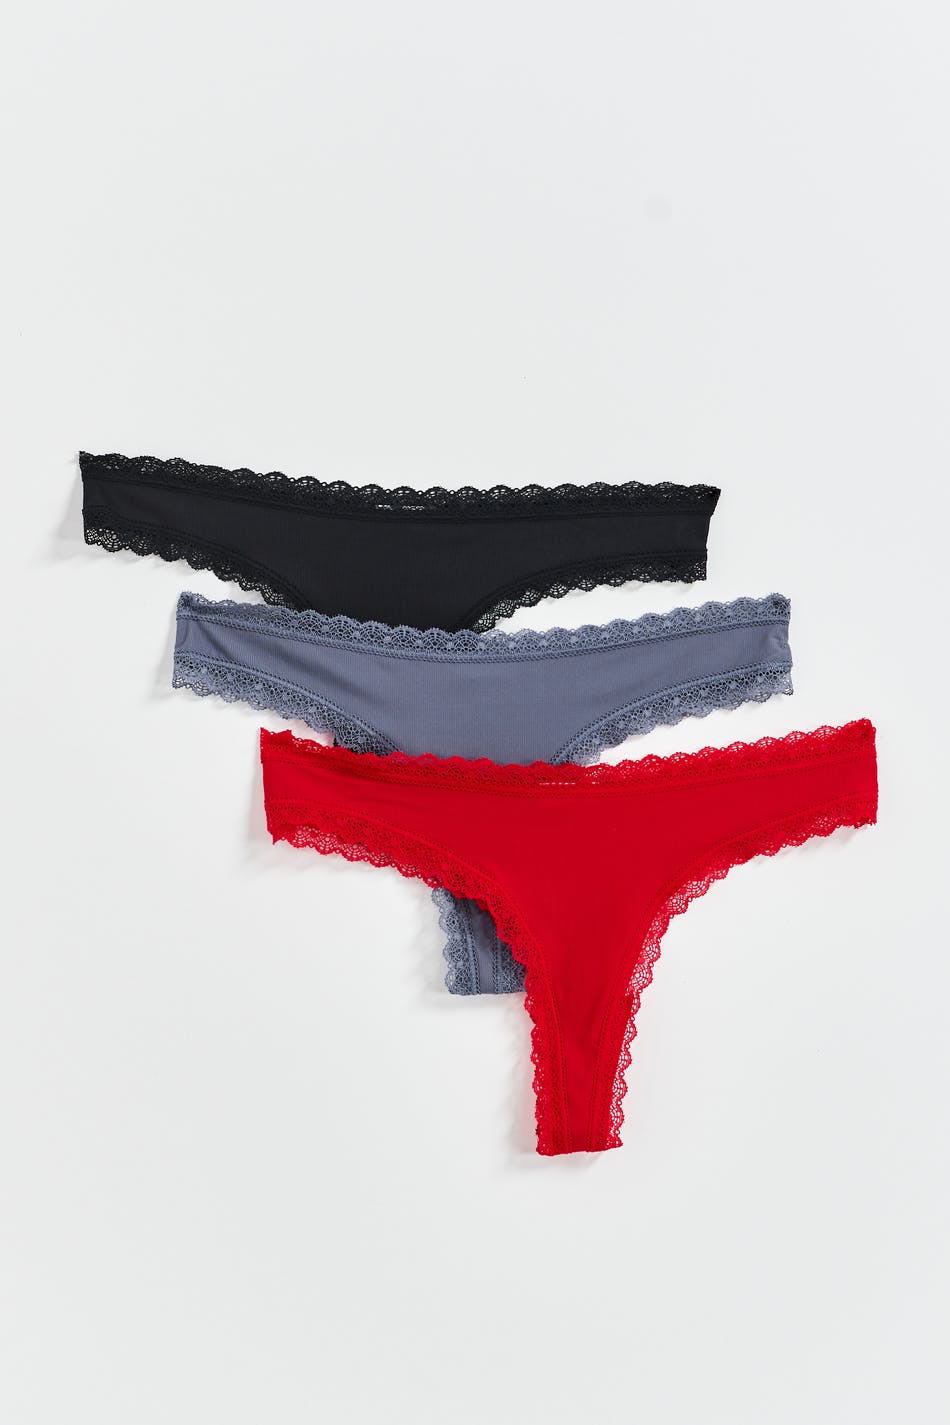 LELINTA 3 Set Women's Lace Thong Panties Sexy G-string Lace Thong Seamless  Panties Lingerie Womens Underwear, Black/White/Red 